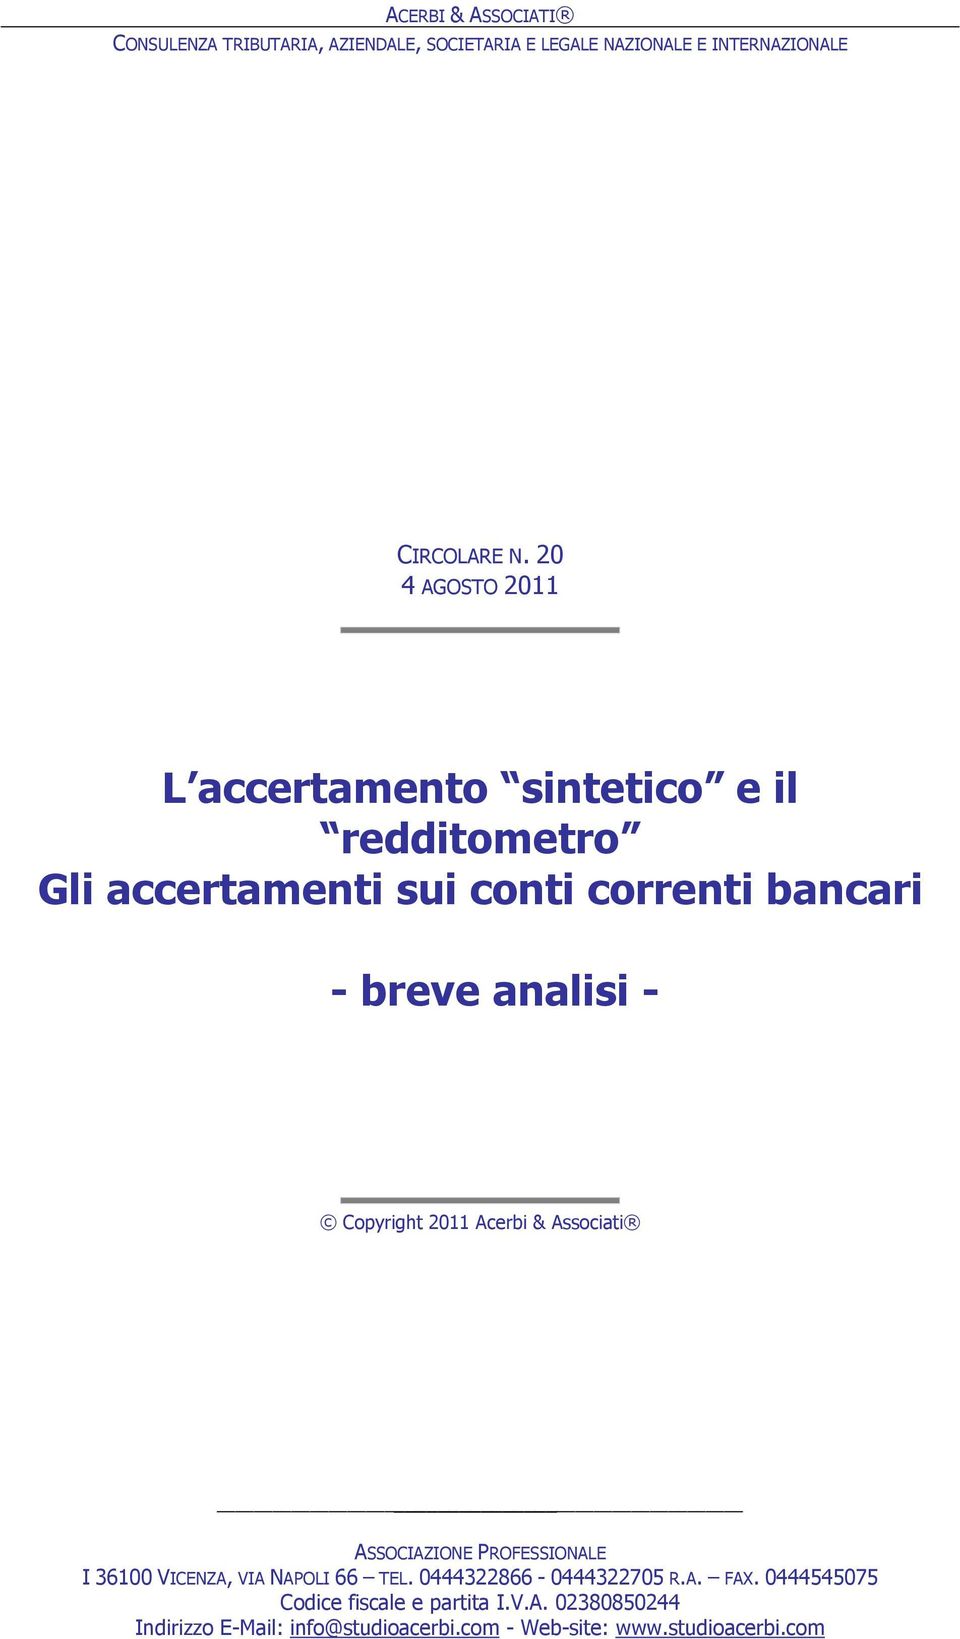 Copyright 2011 Acerbi & Associati ASSOCIAZIONE PROFESSIONALE I 36100 VICENZA, VIA NAPOLI 66 TEL. 0444322866-0444322705 R.A. FAX.